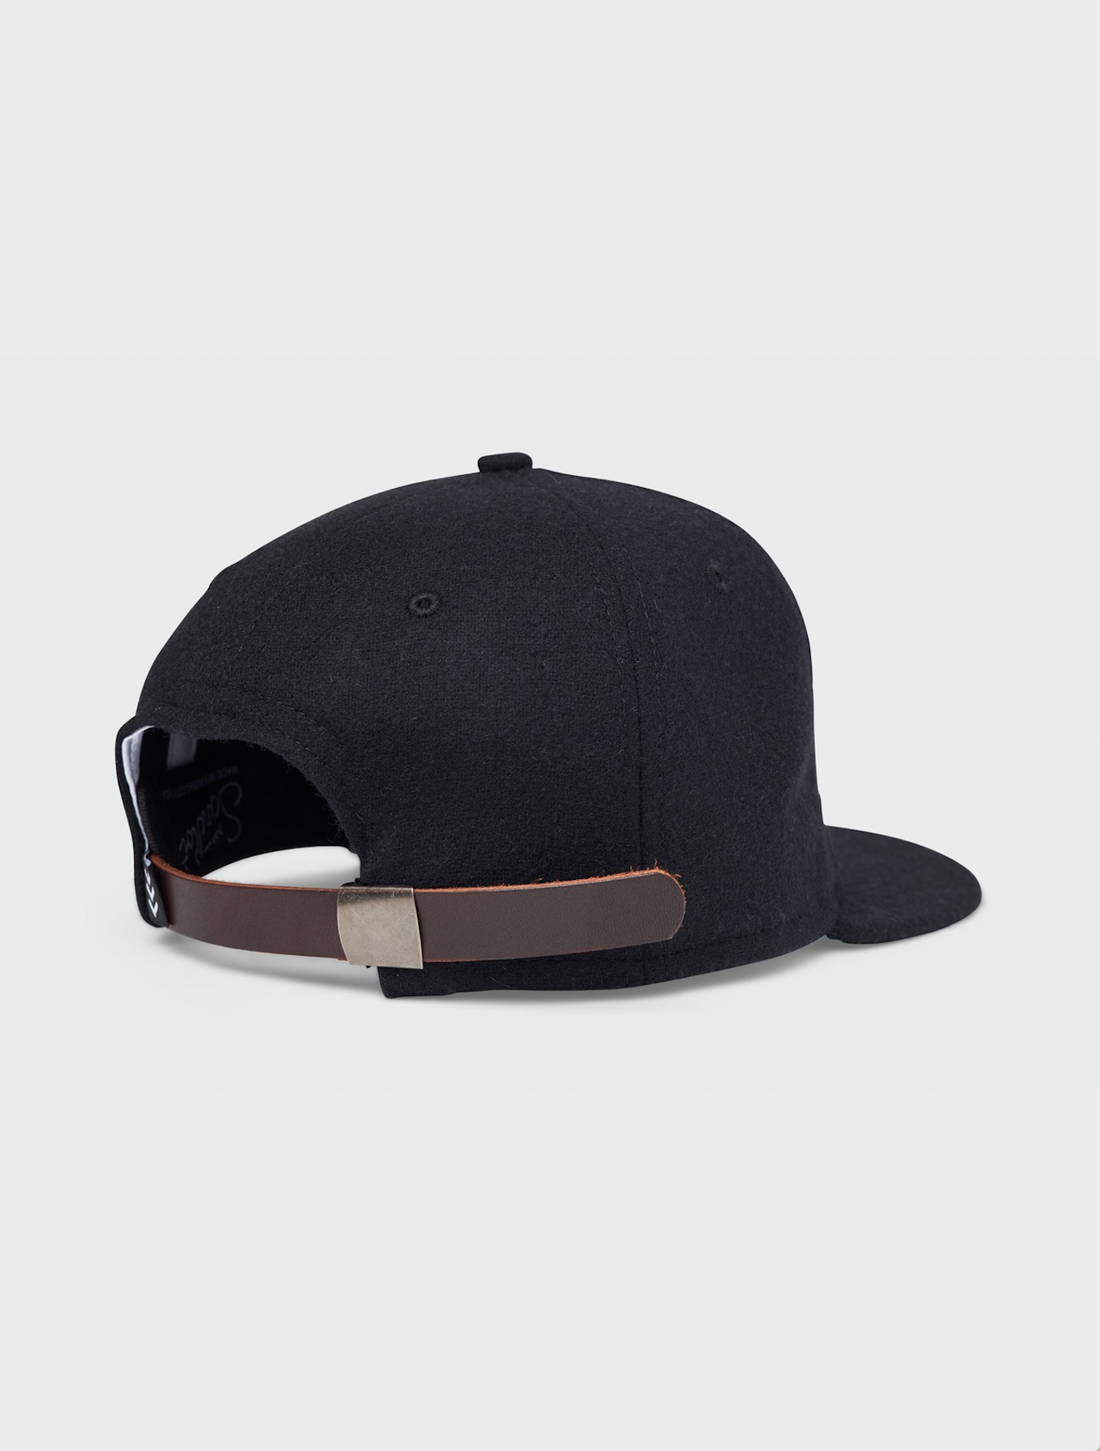 Black Vintage Flatbill Hat - Mizzou Wordmark